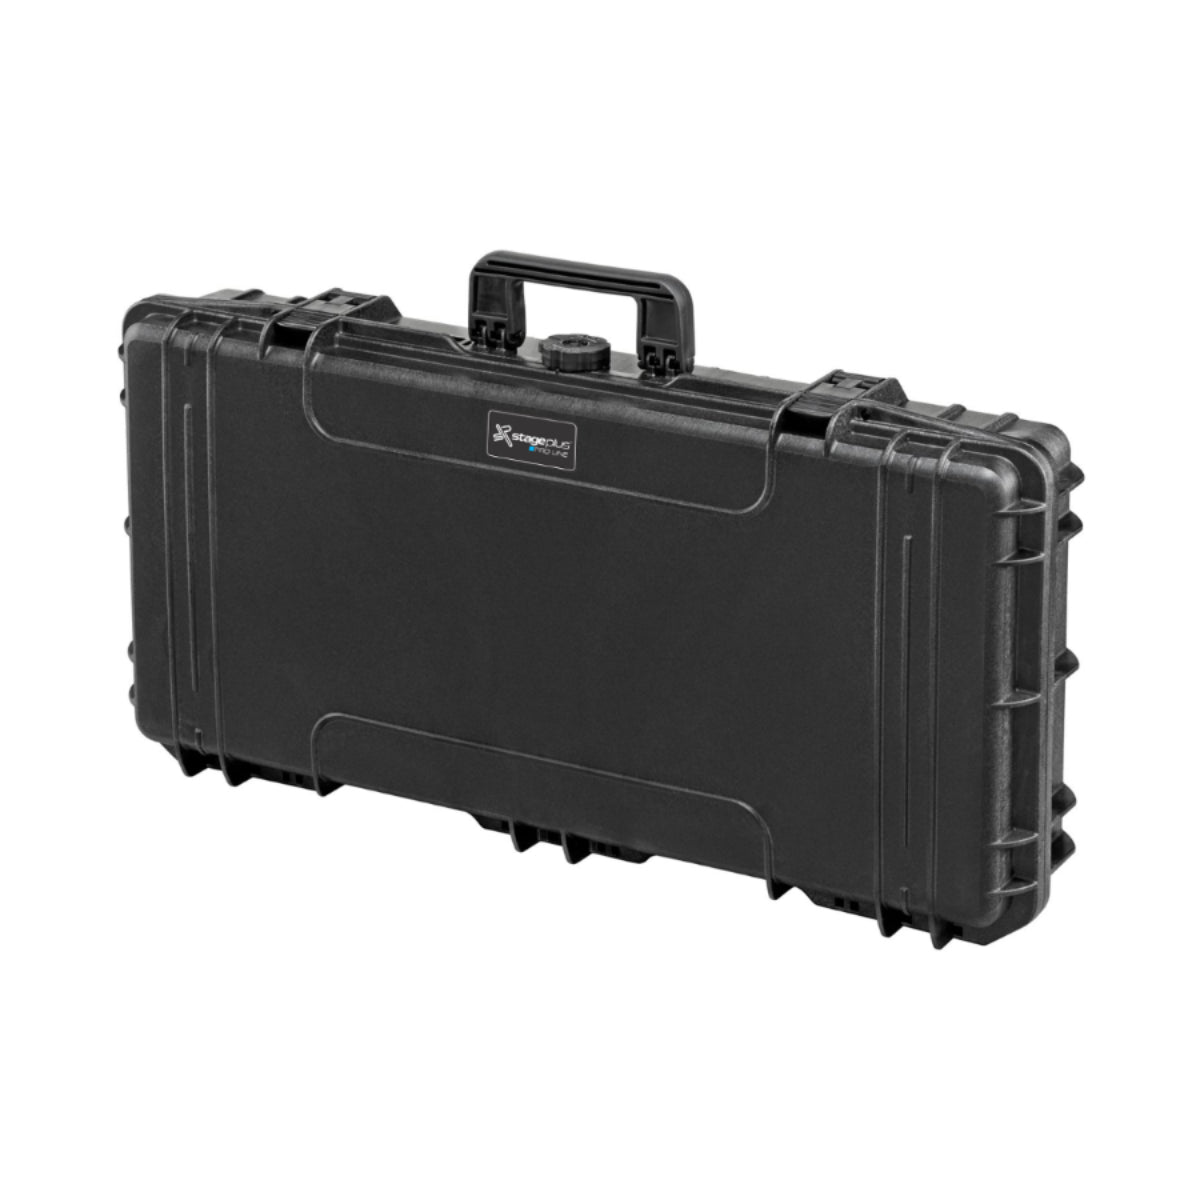 SP PRO 800 Black Carry Case, Empty, ID: L800xW370xH140mm